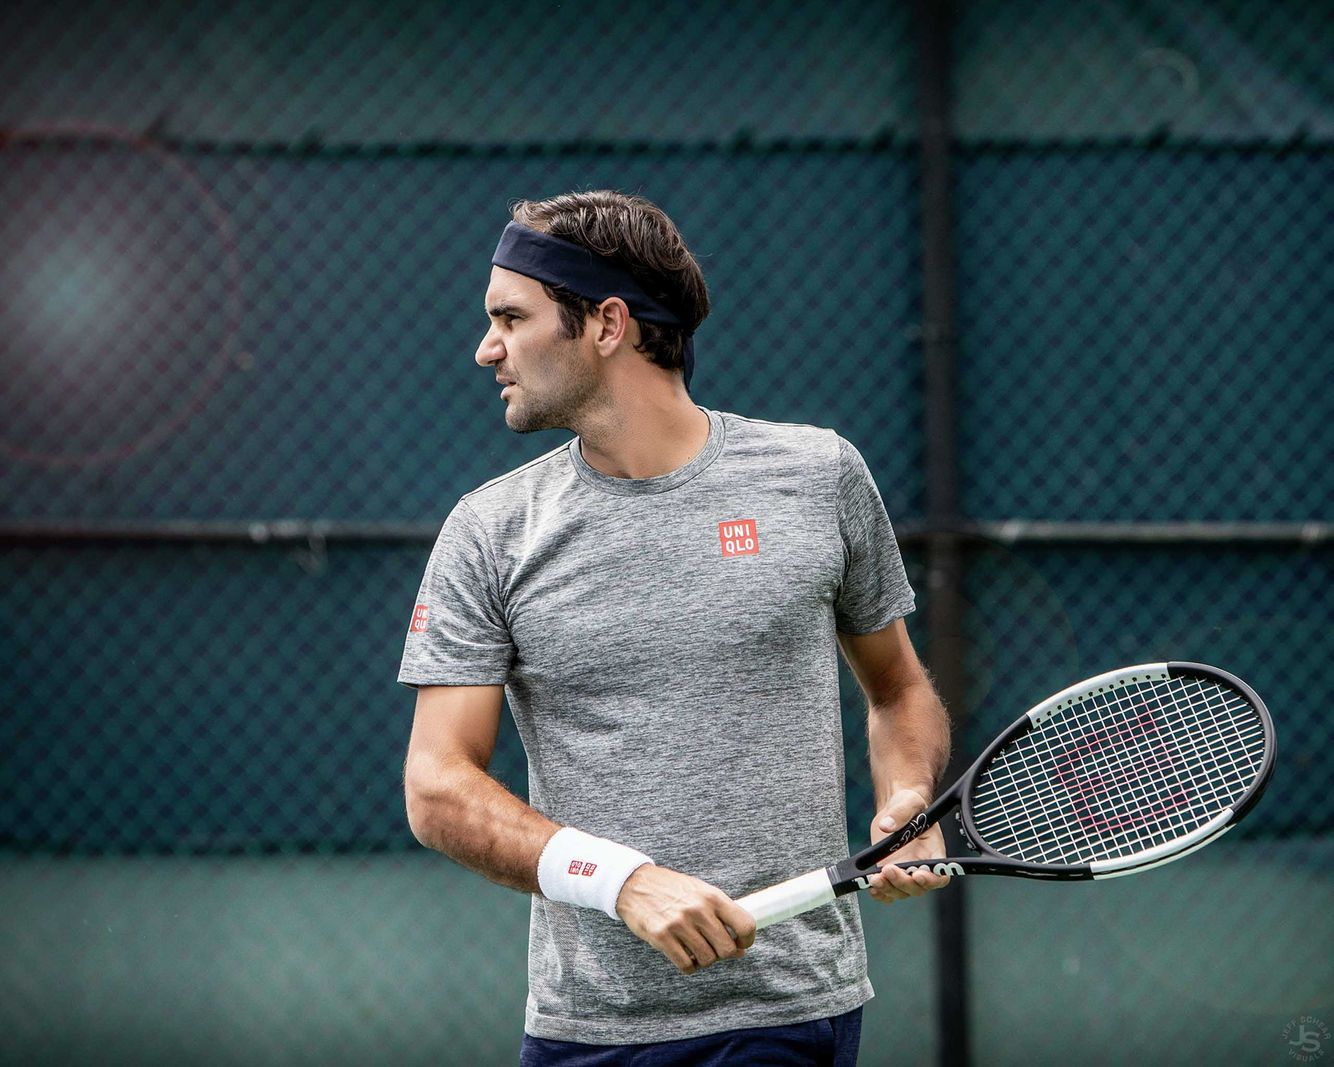 Roger Federer By Chicago Celebrity Portrait Photographer Jeff Schear